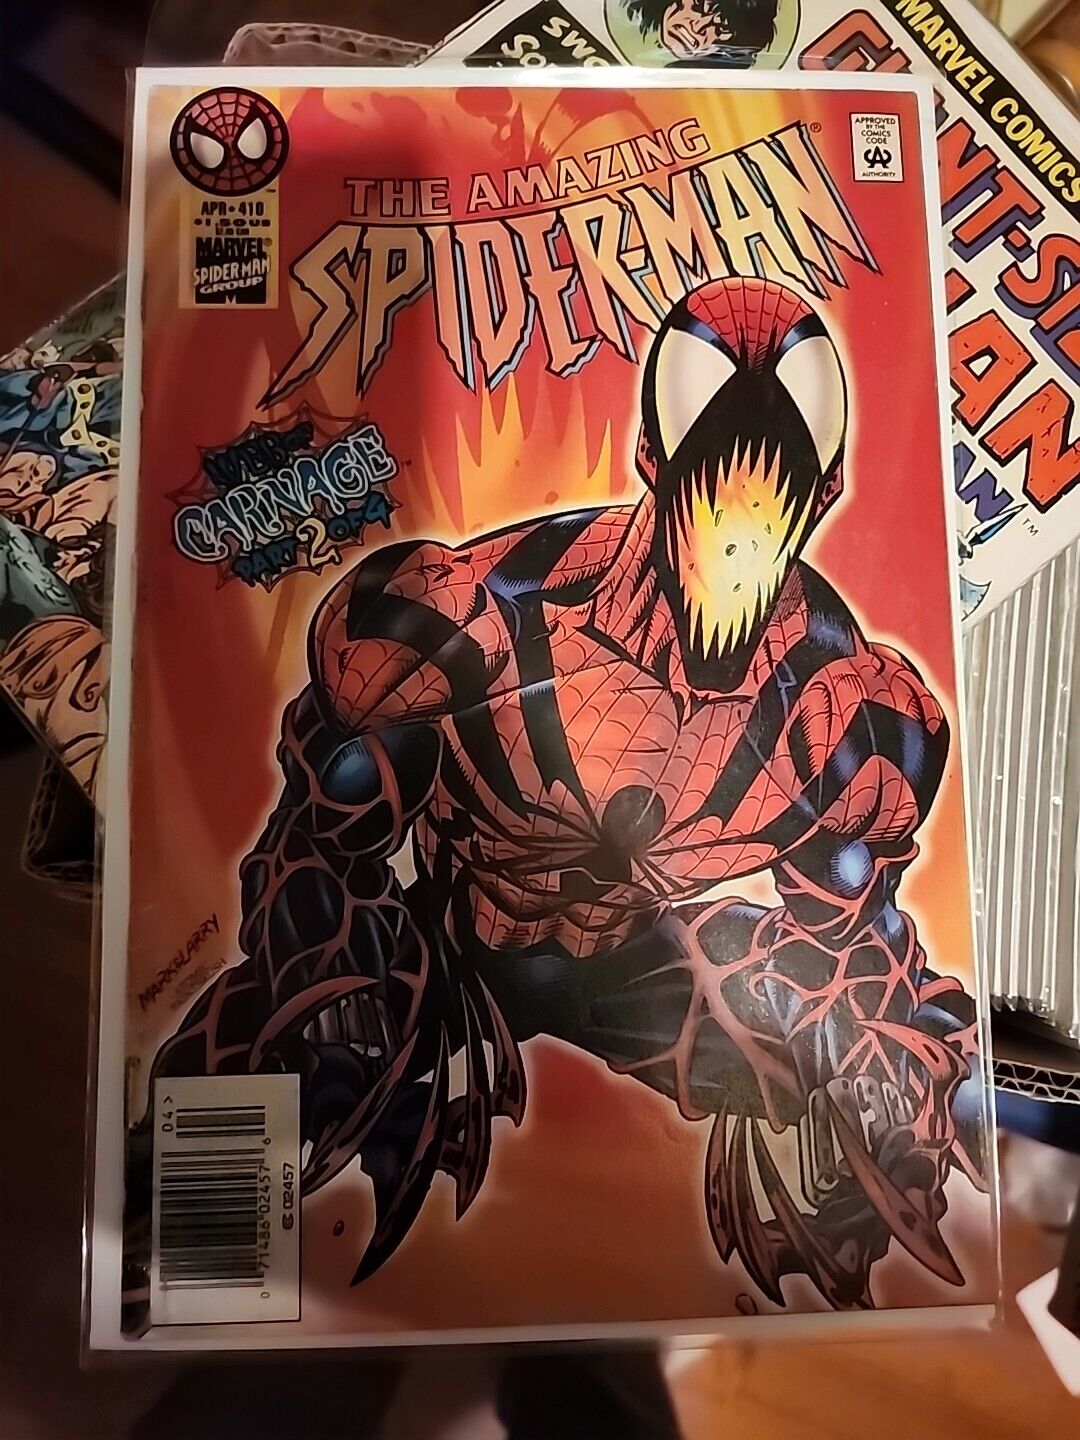 The Amazing Spider-Man #410 (Marvel, April 1996) F